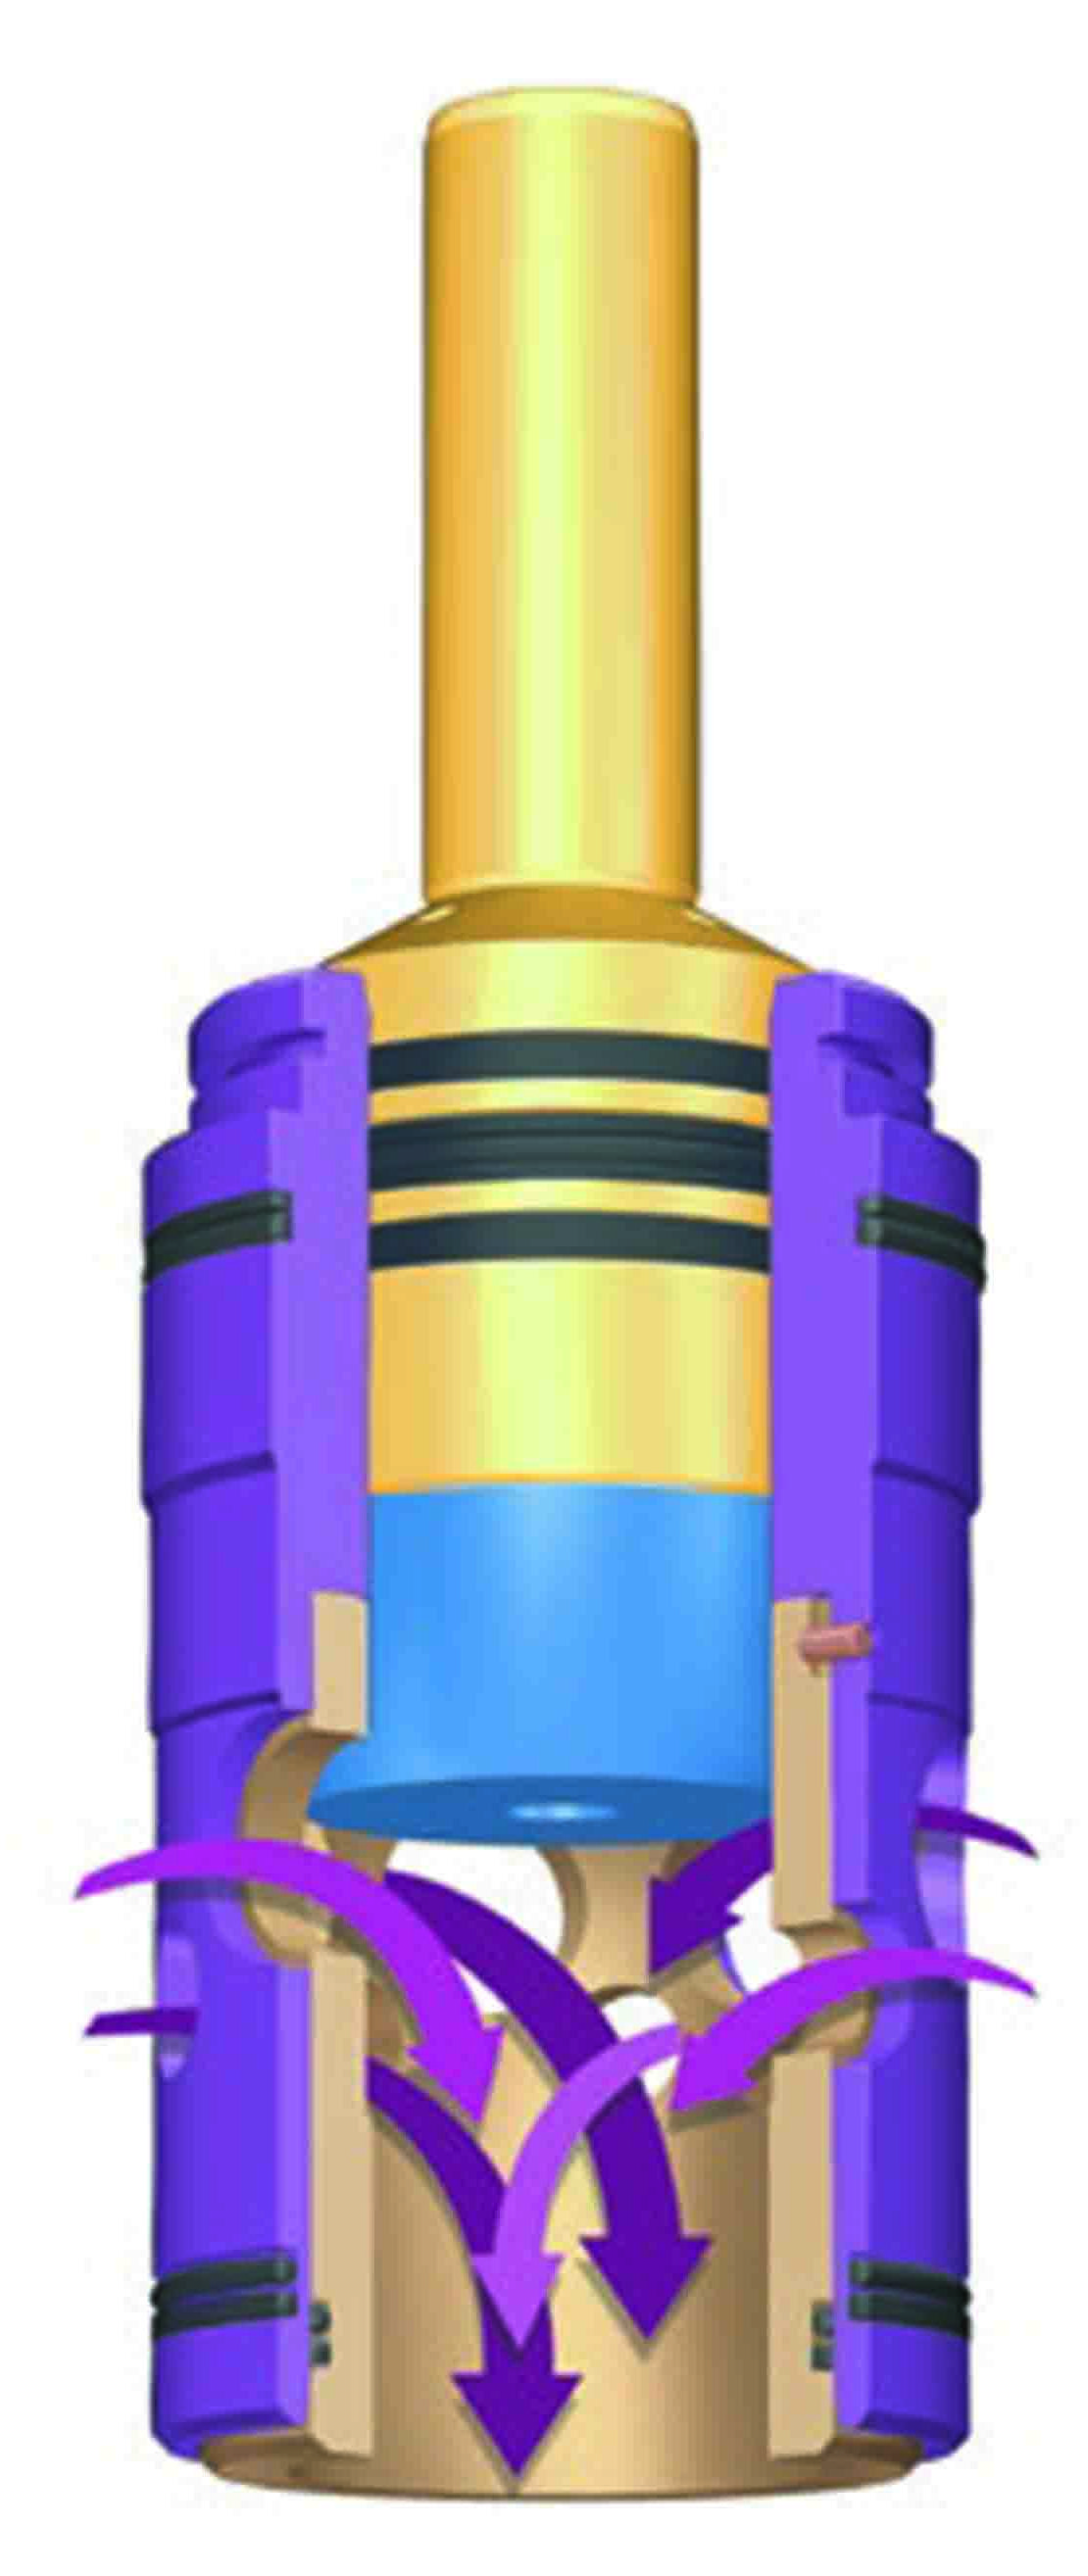 Subsea choke actuator engineering drawing.